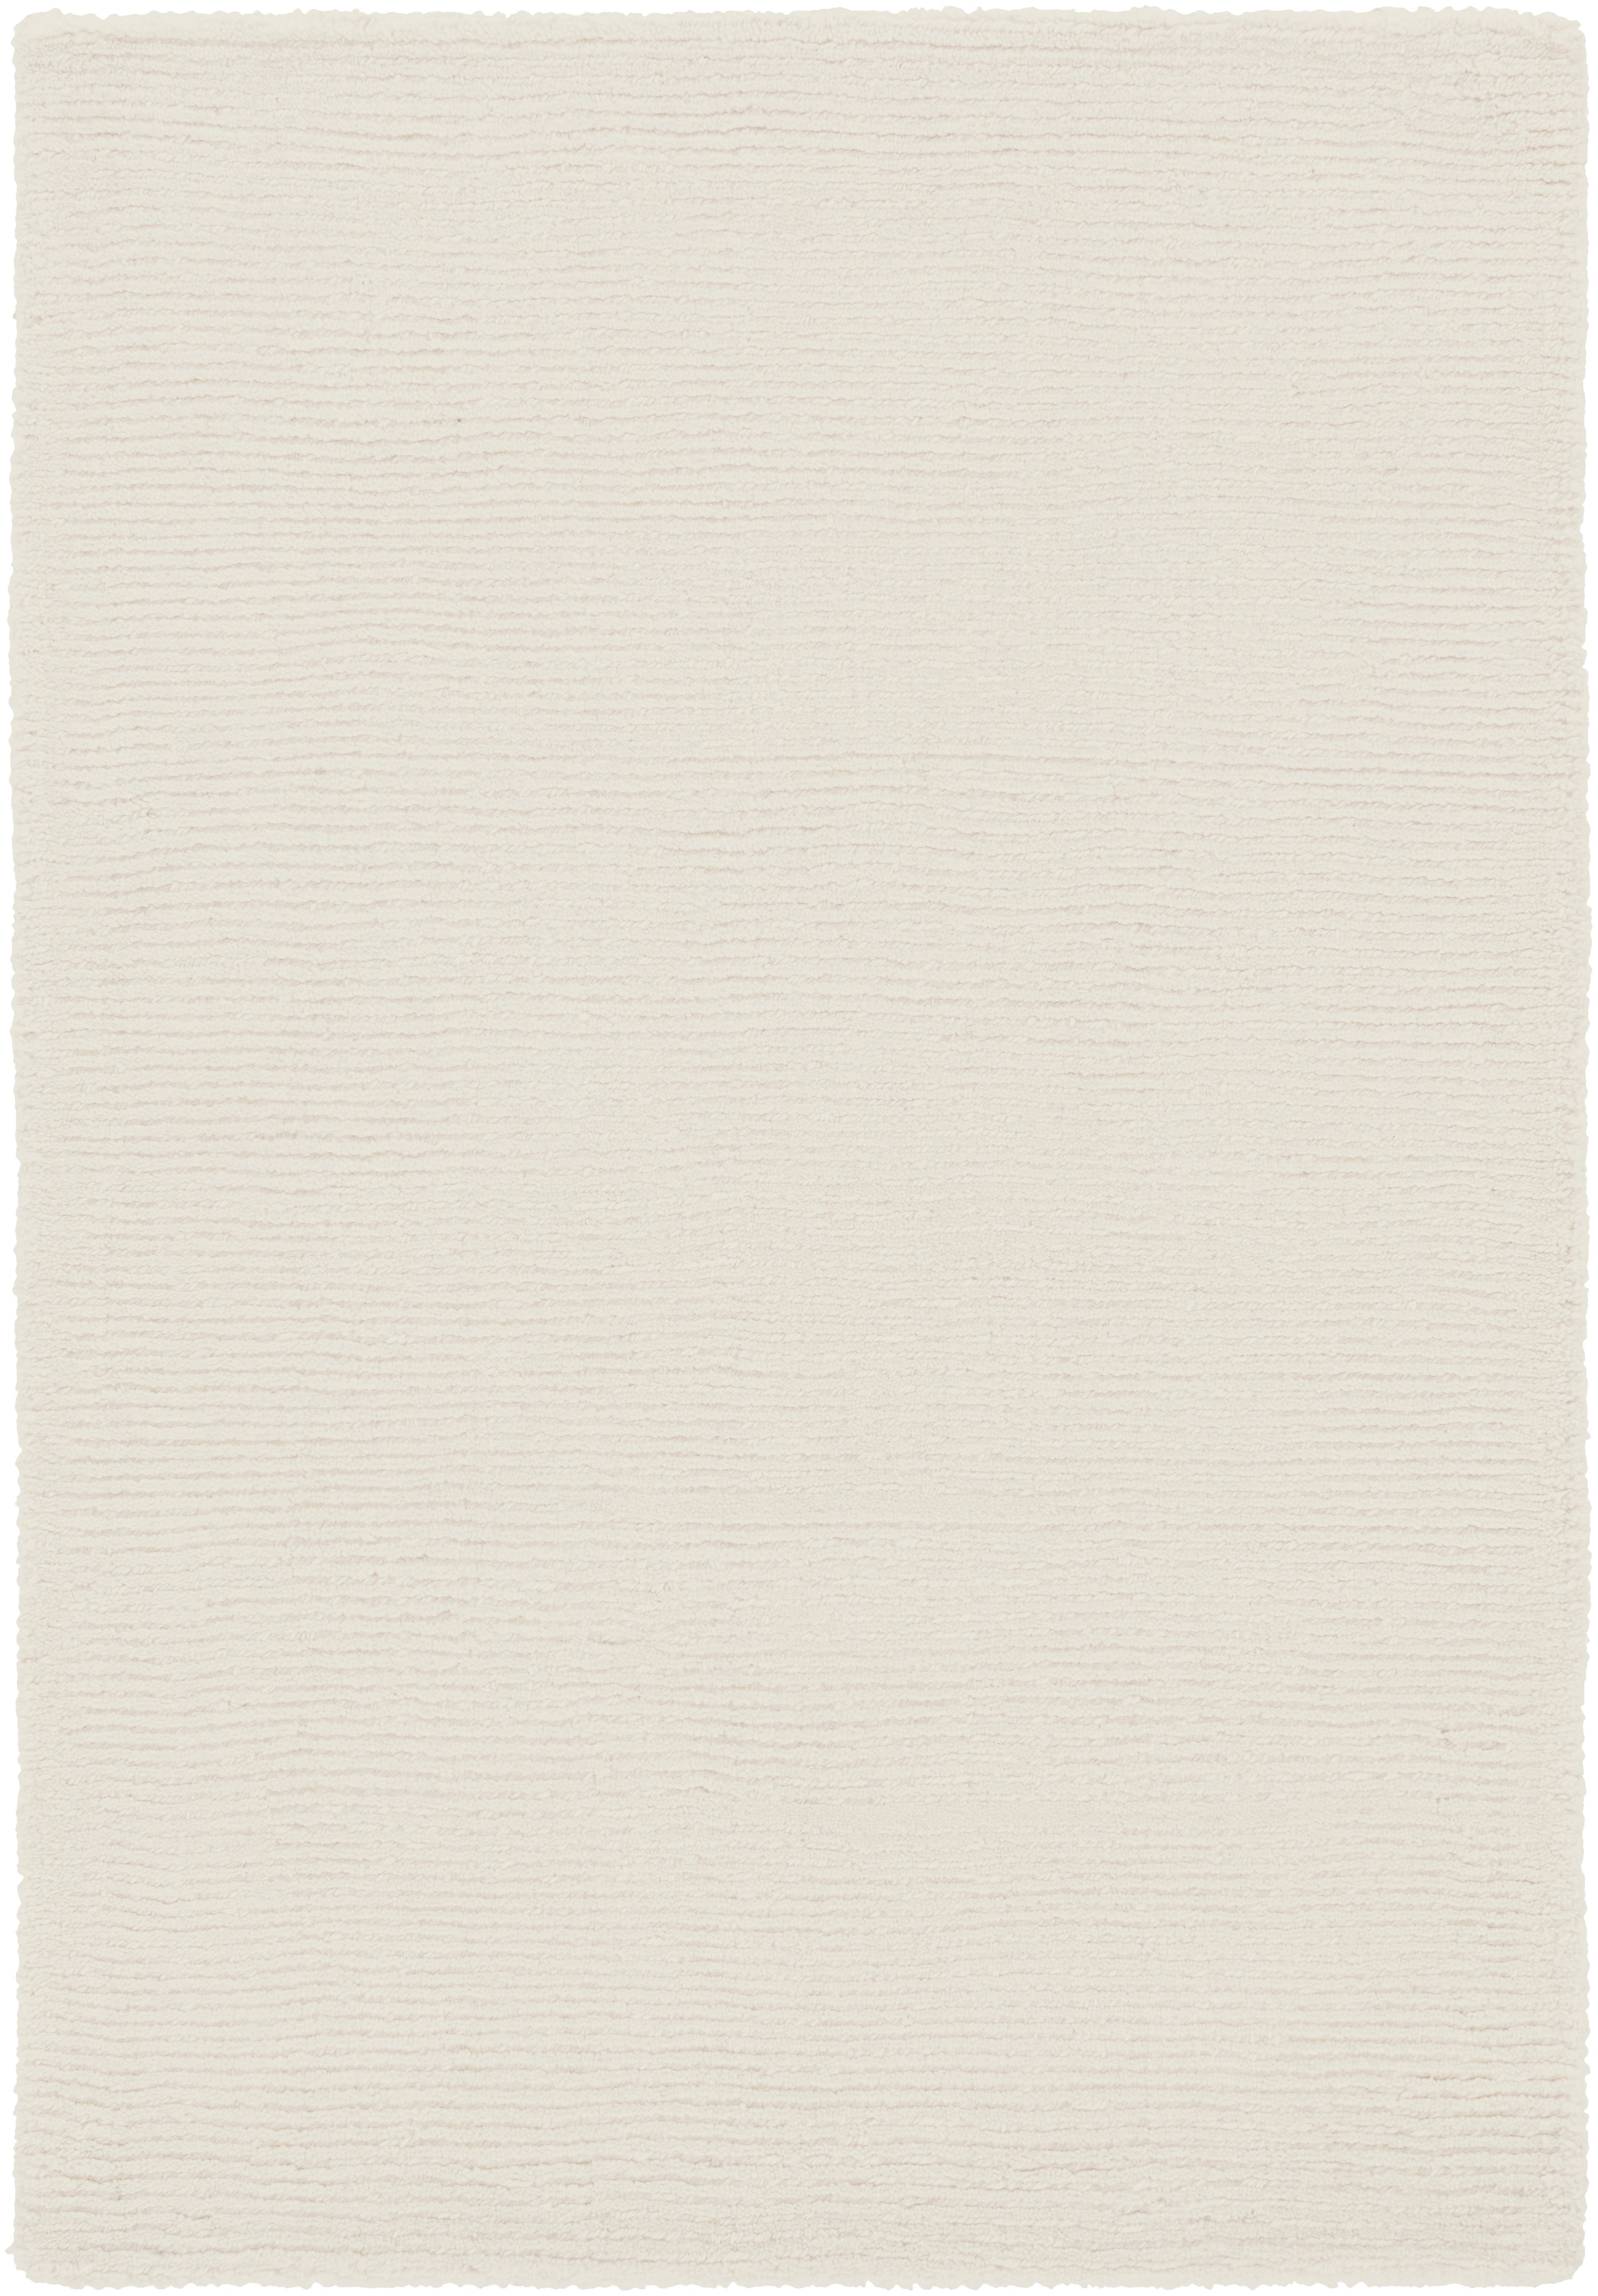 Tapete Colors Blanco - Daaq Interiores